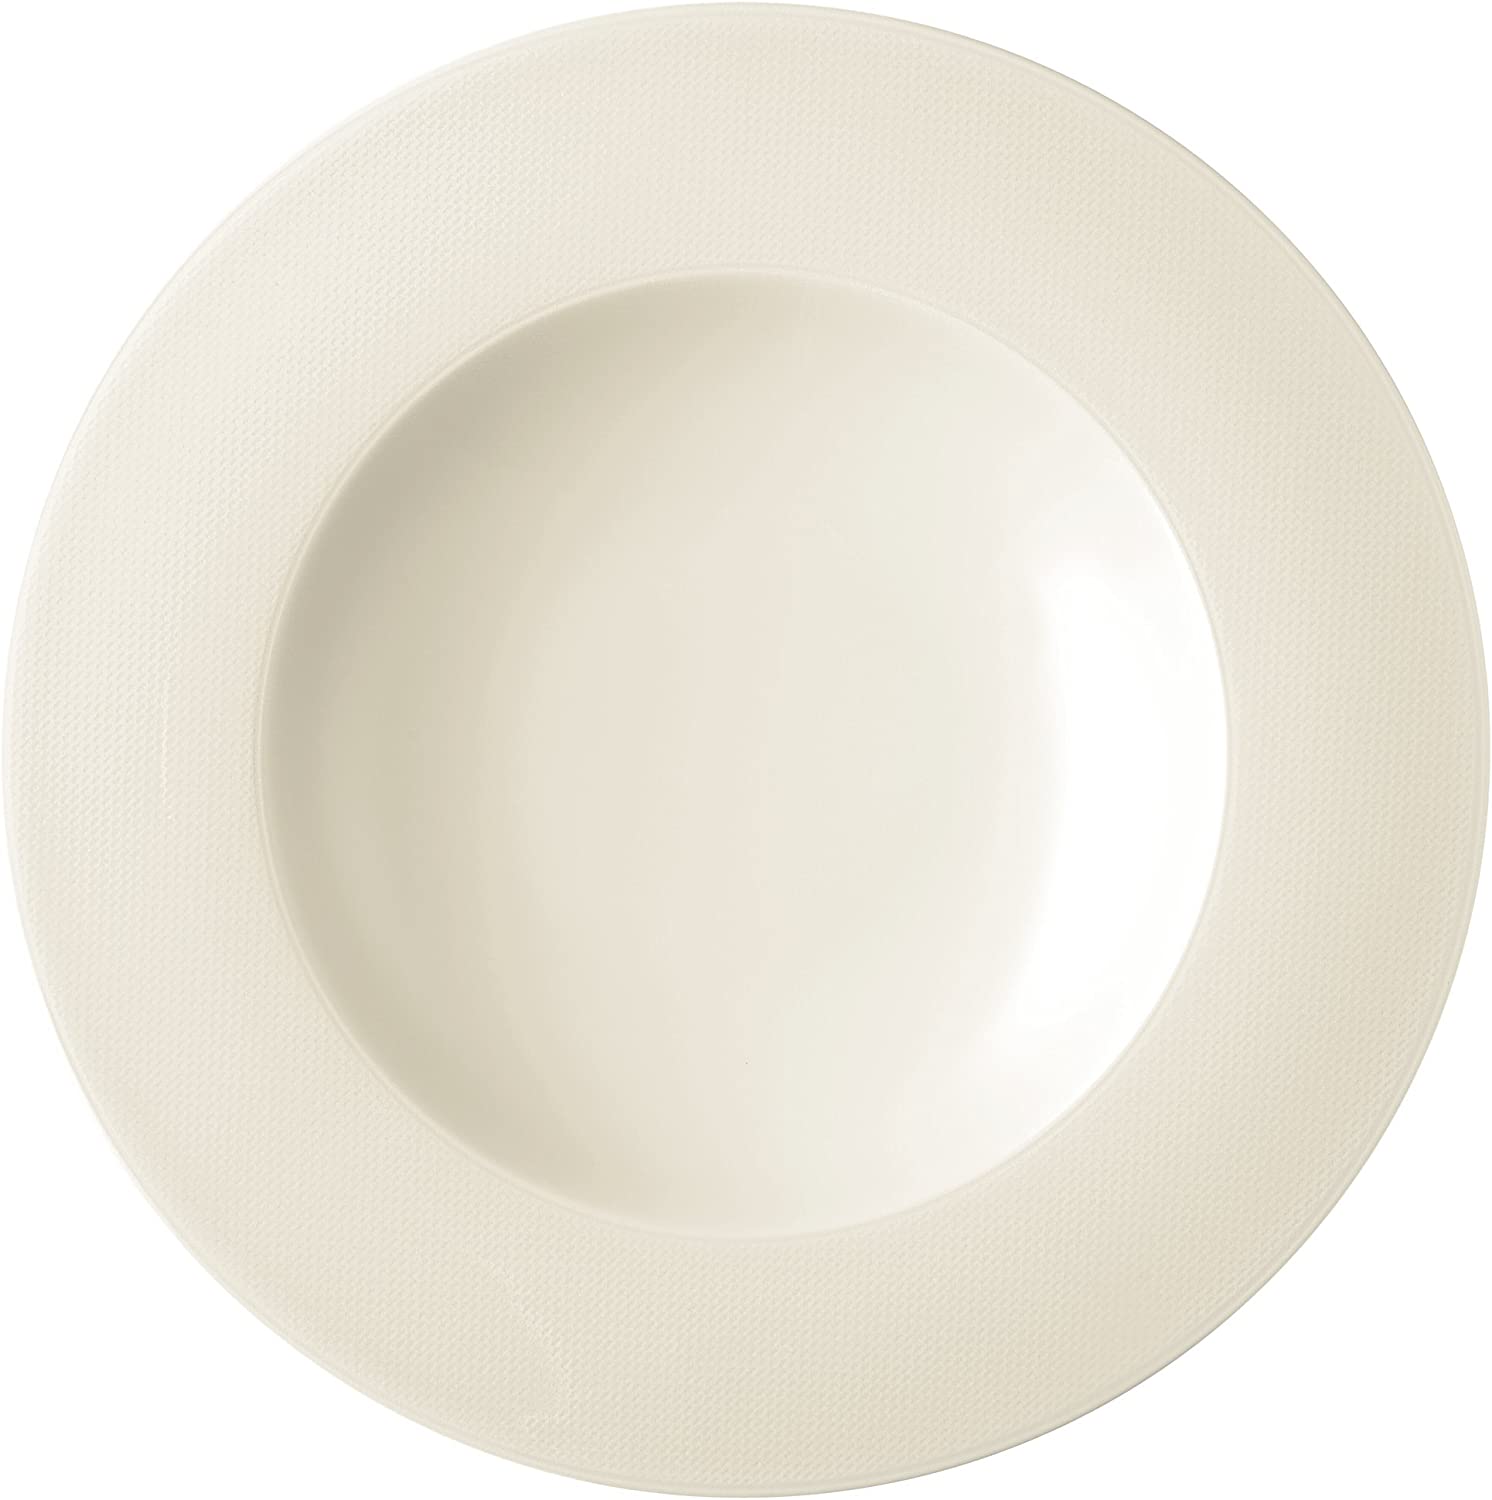 Pasta Plate 29.8 cm Diamond White Universal 00003 by Seltmann Weiden